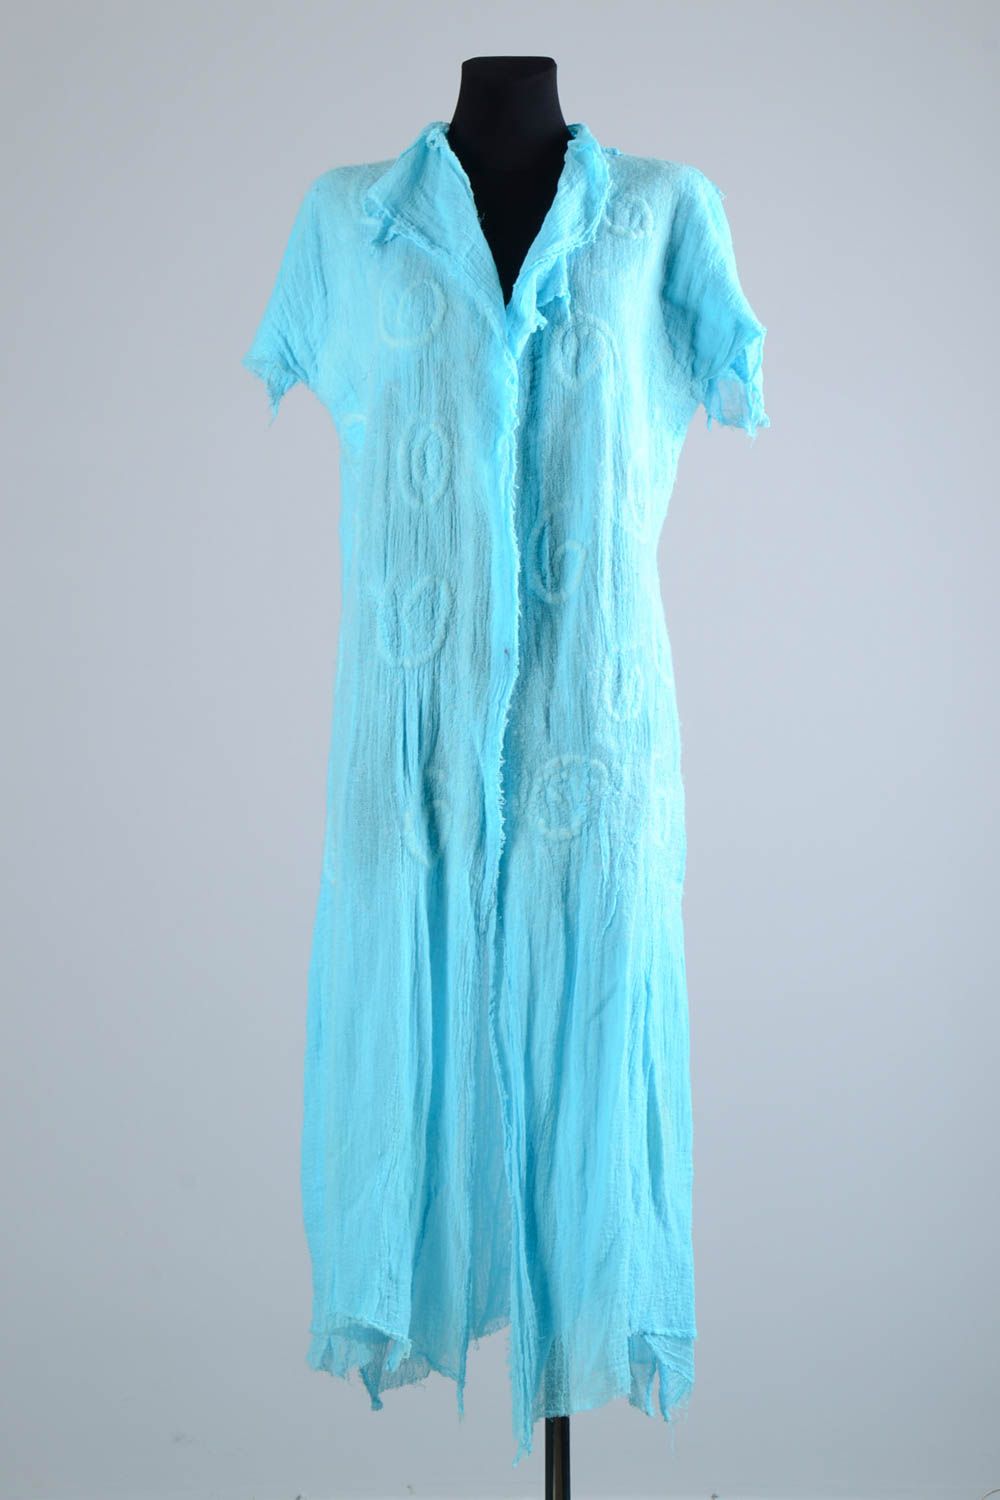 Handmade wraps designer wraps women wraps summer clothes gift for women photo 1